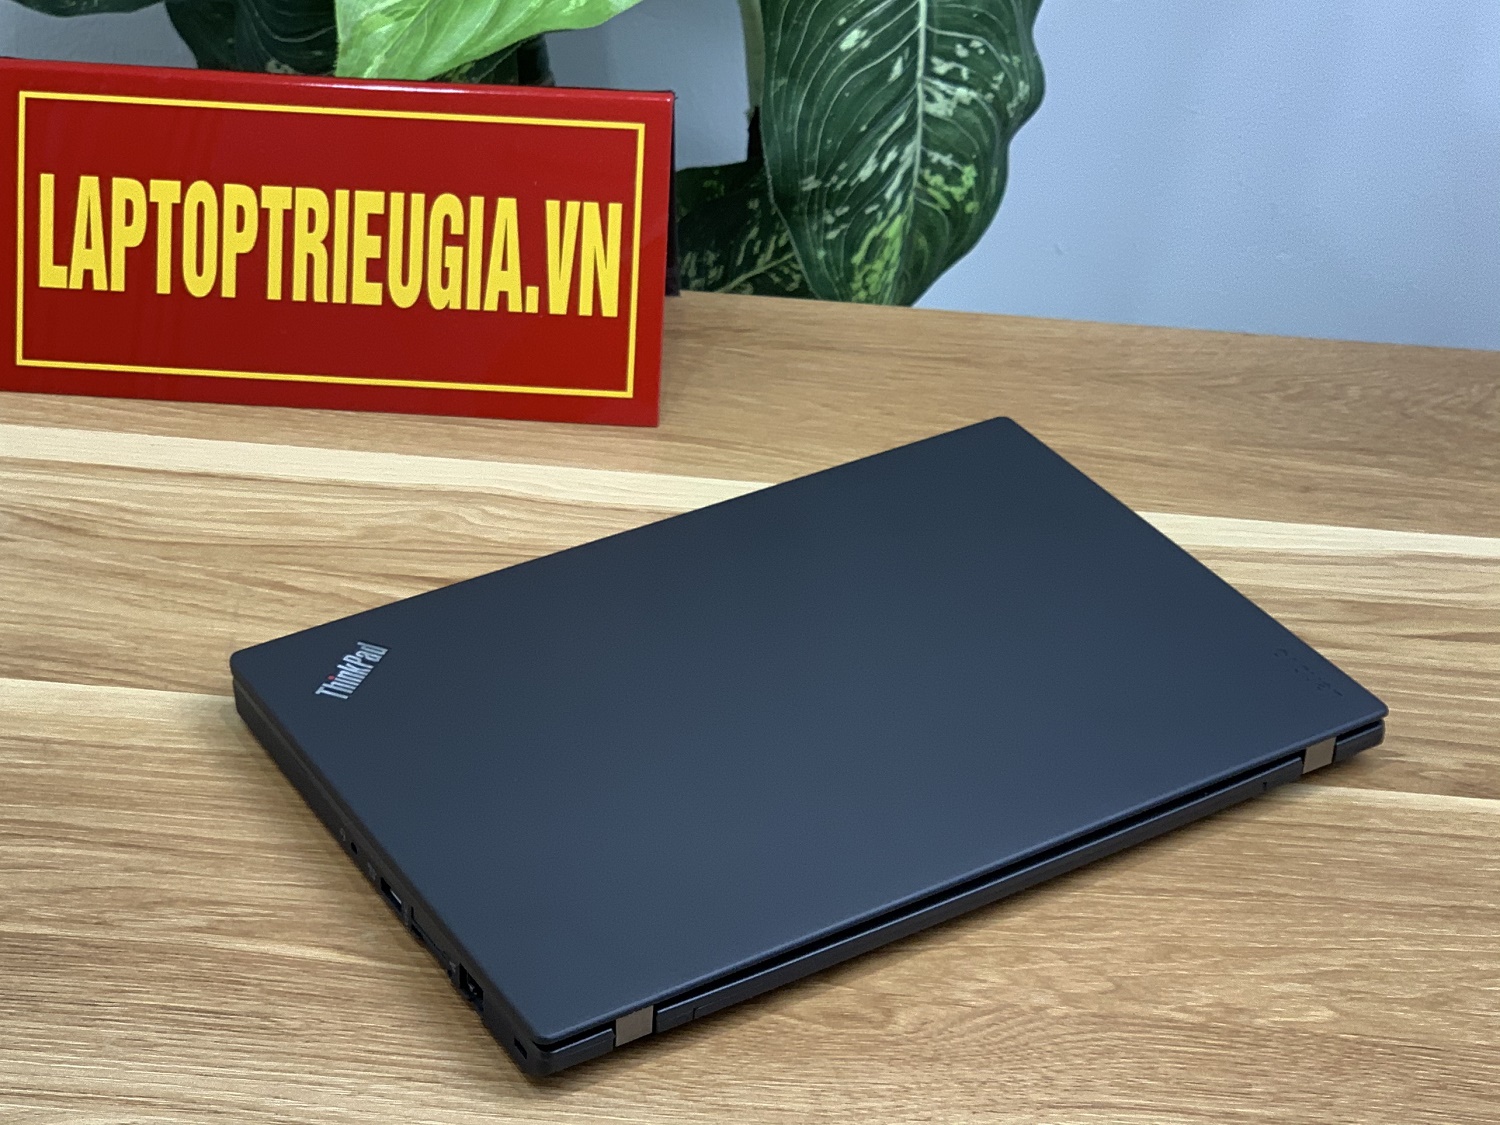 Laptop Lenovo Thinkpad X260: I5 6300U | 4GB | 128GB | 12.5 inch HD